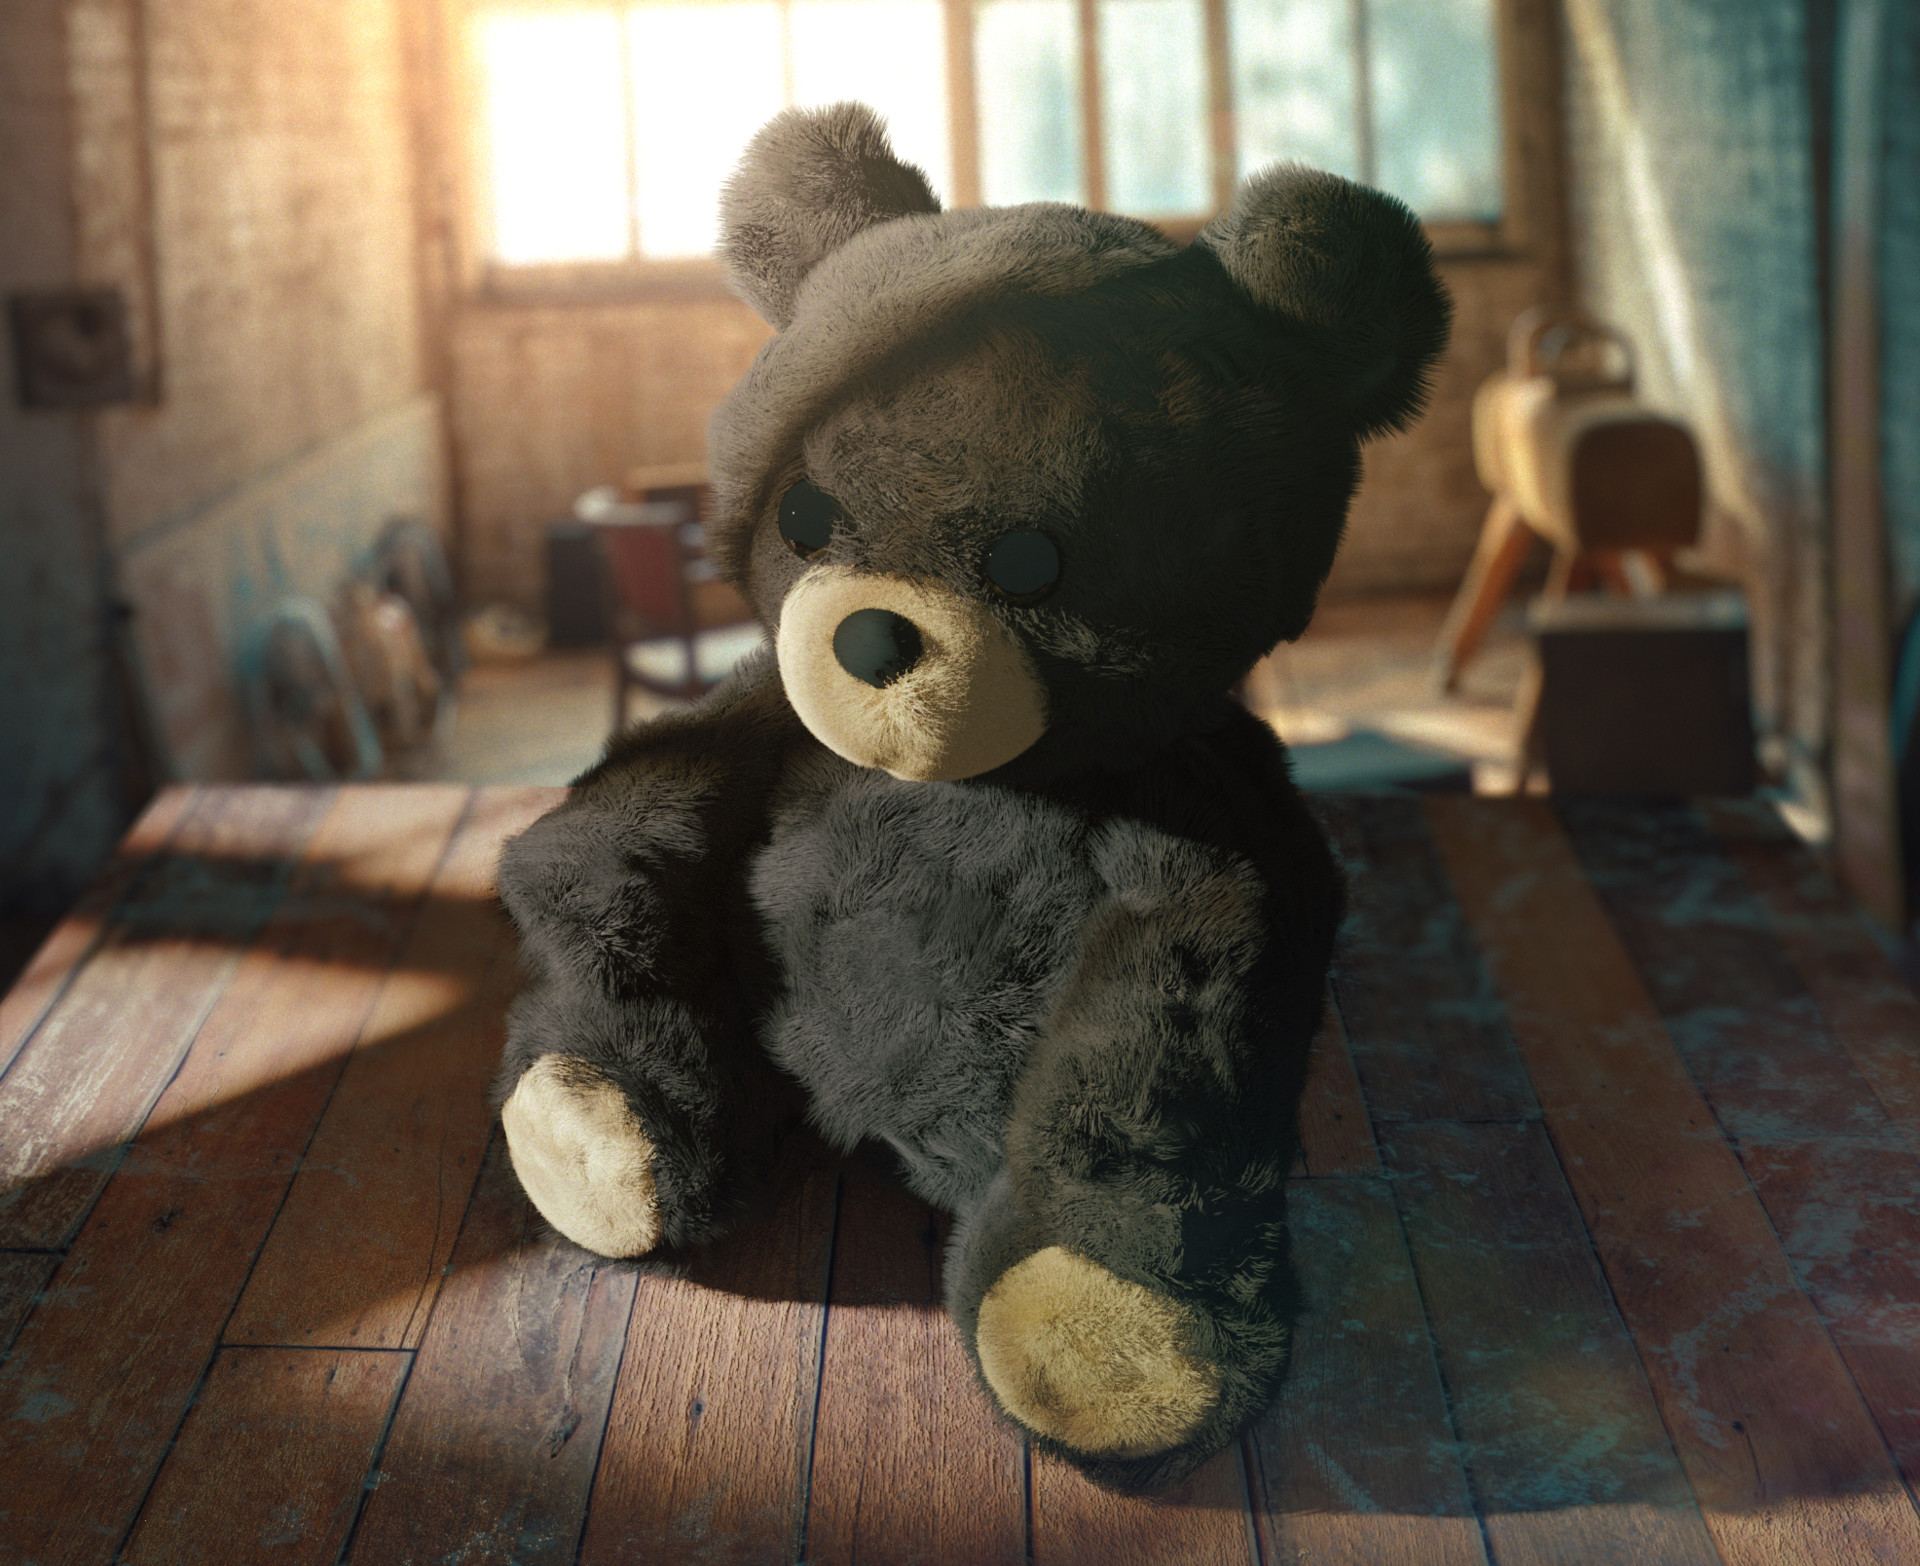 ArtStation - Teddy